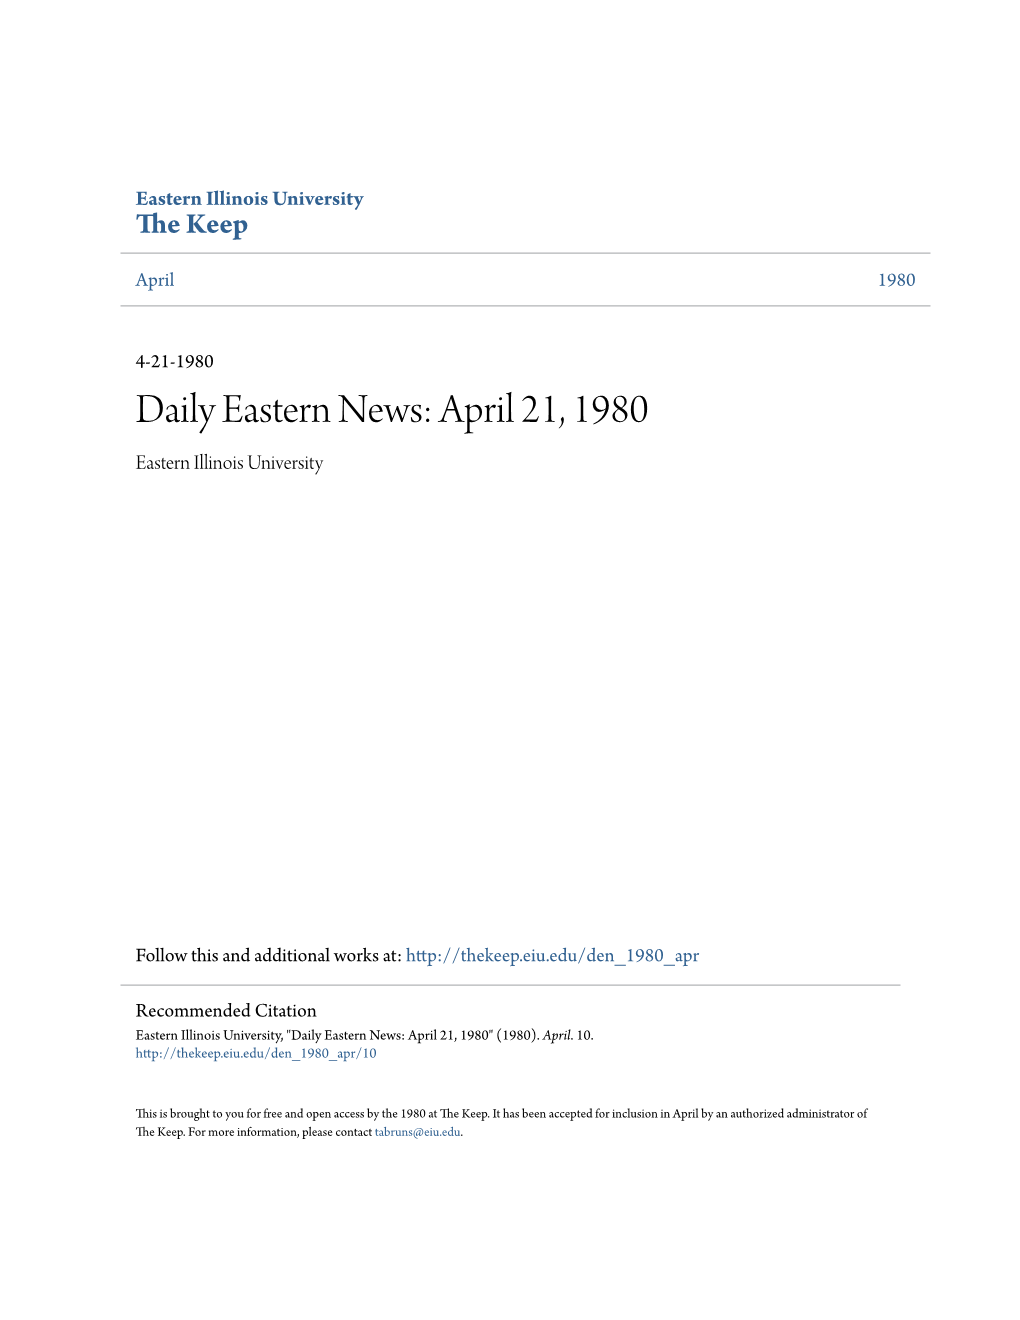 Daily Eastern News: April 21, 1980 Eastern Illinois University